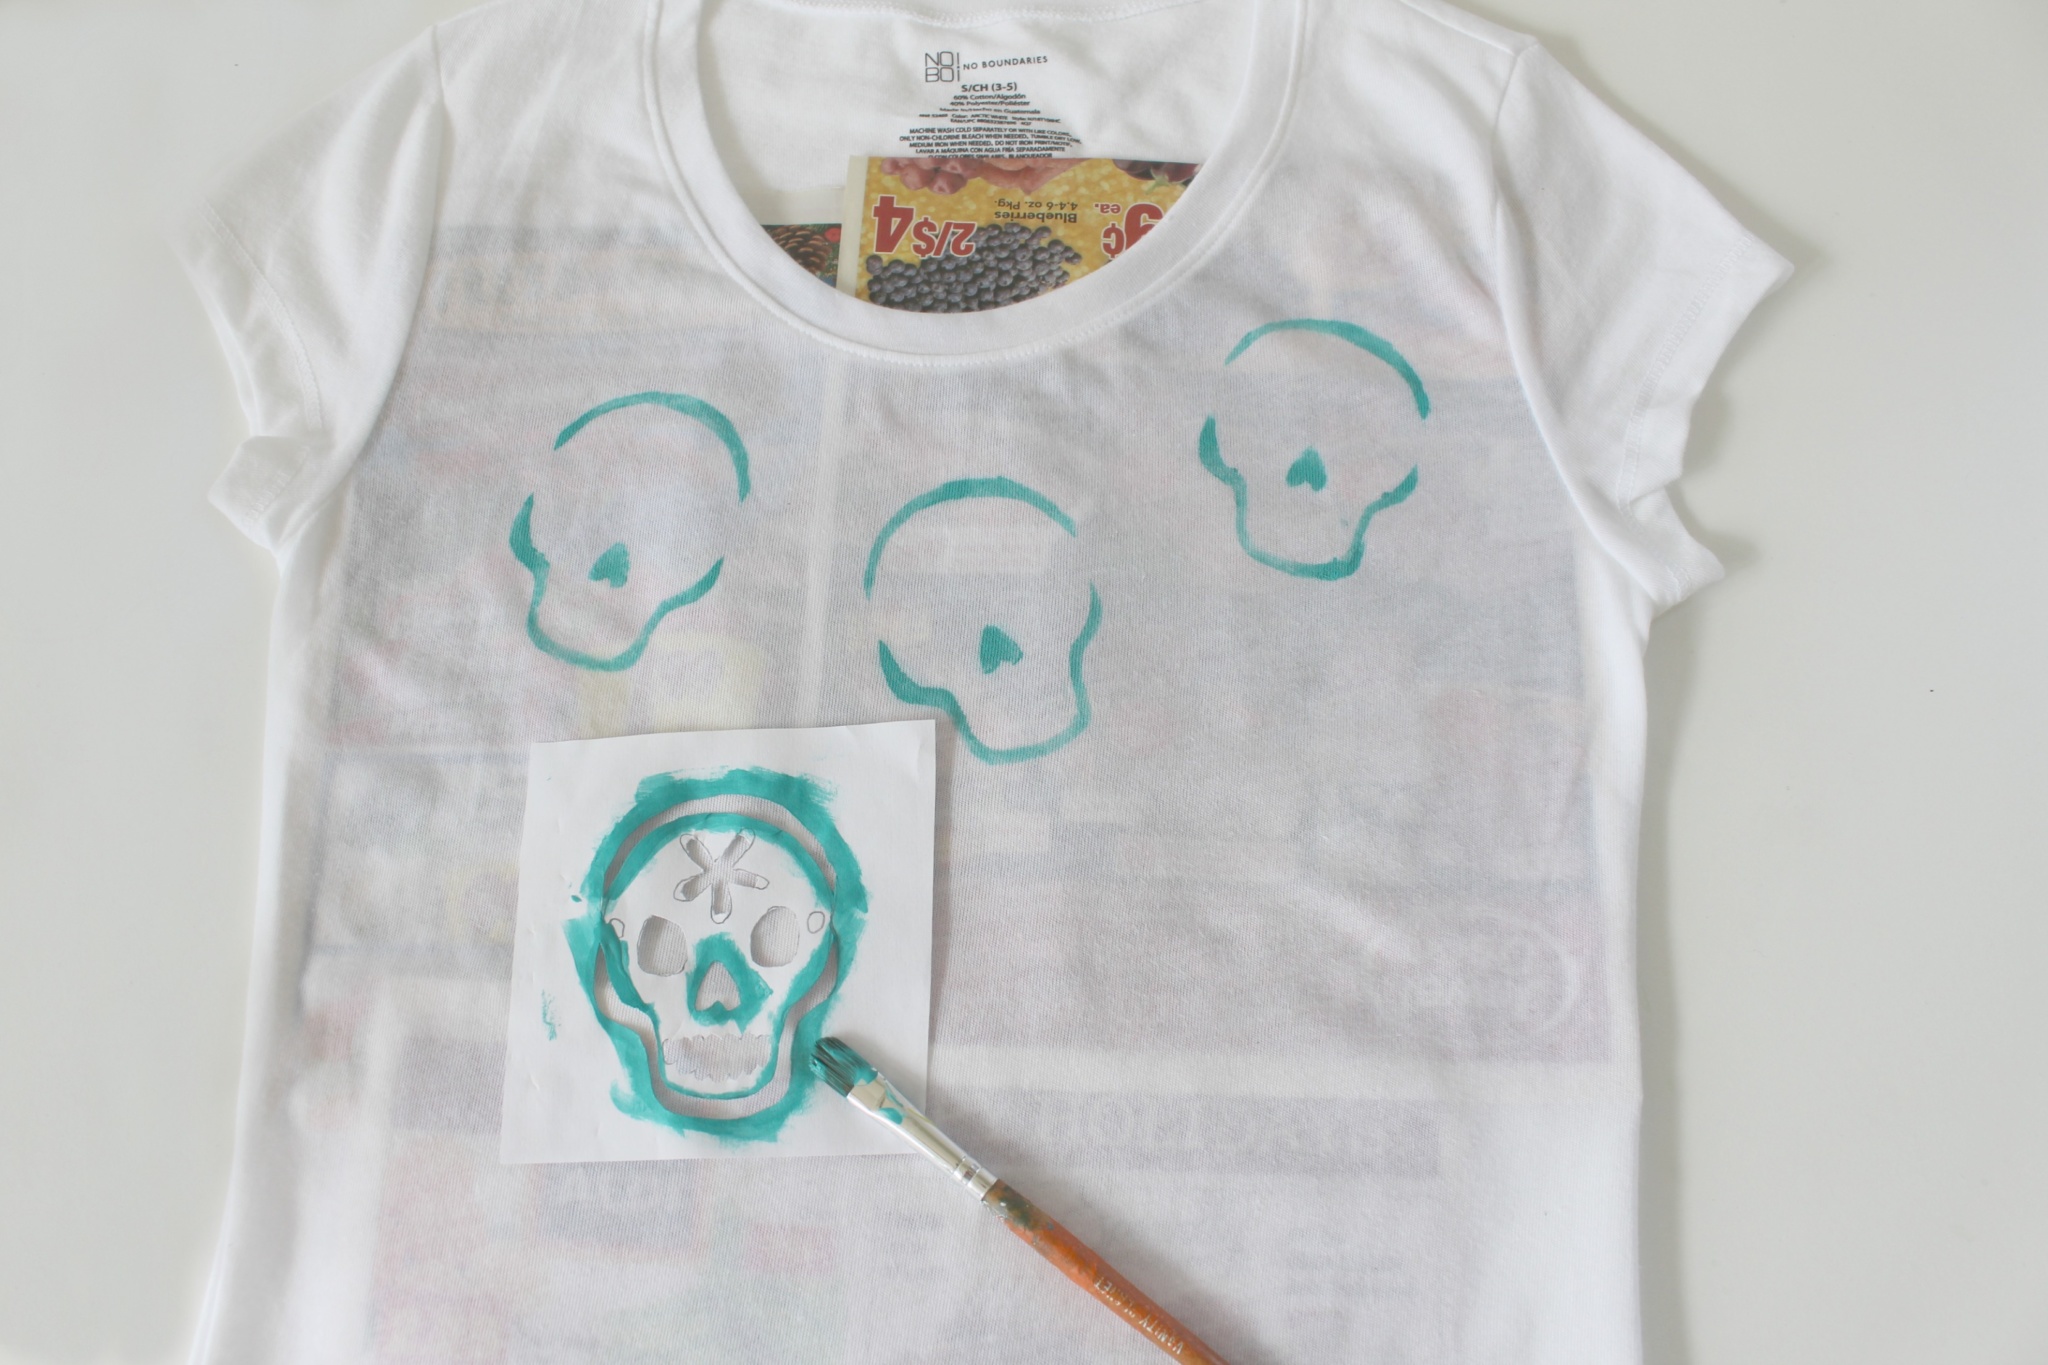 DIY sugar skull t-shirt